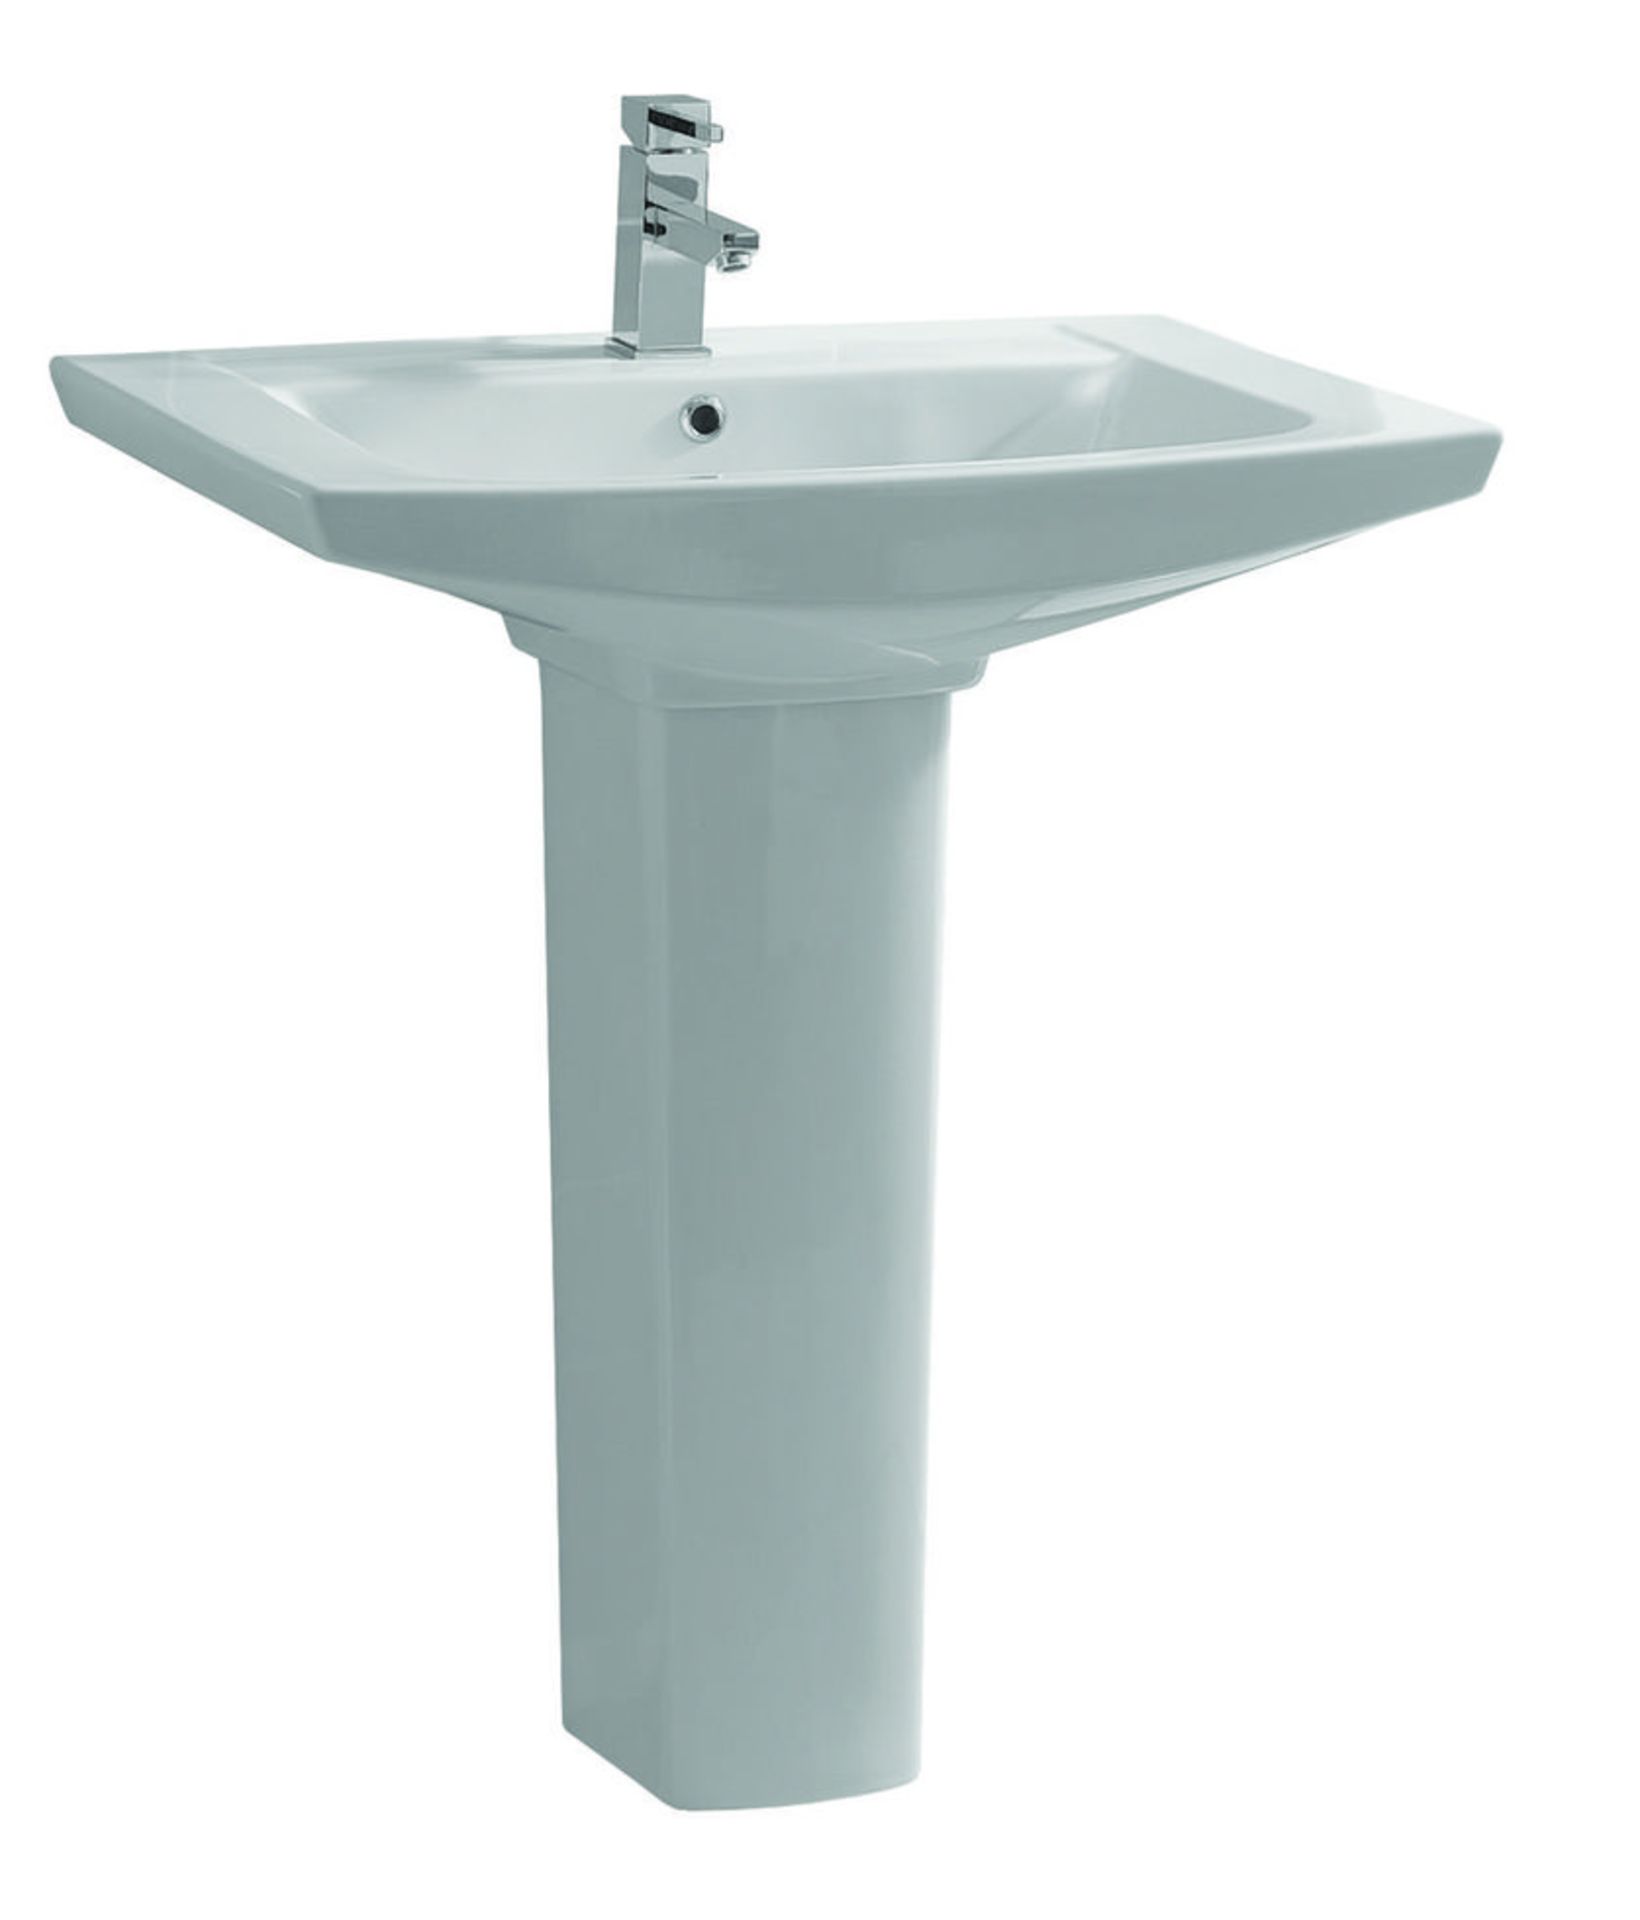 4 x Caprice Single Tap Hole Sink Basins With Full Pedestal - Vogue Bathrooms - 71cm Width - Brand